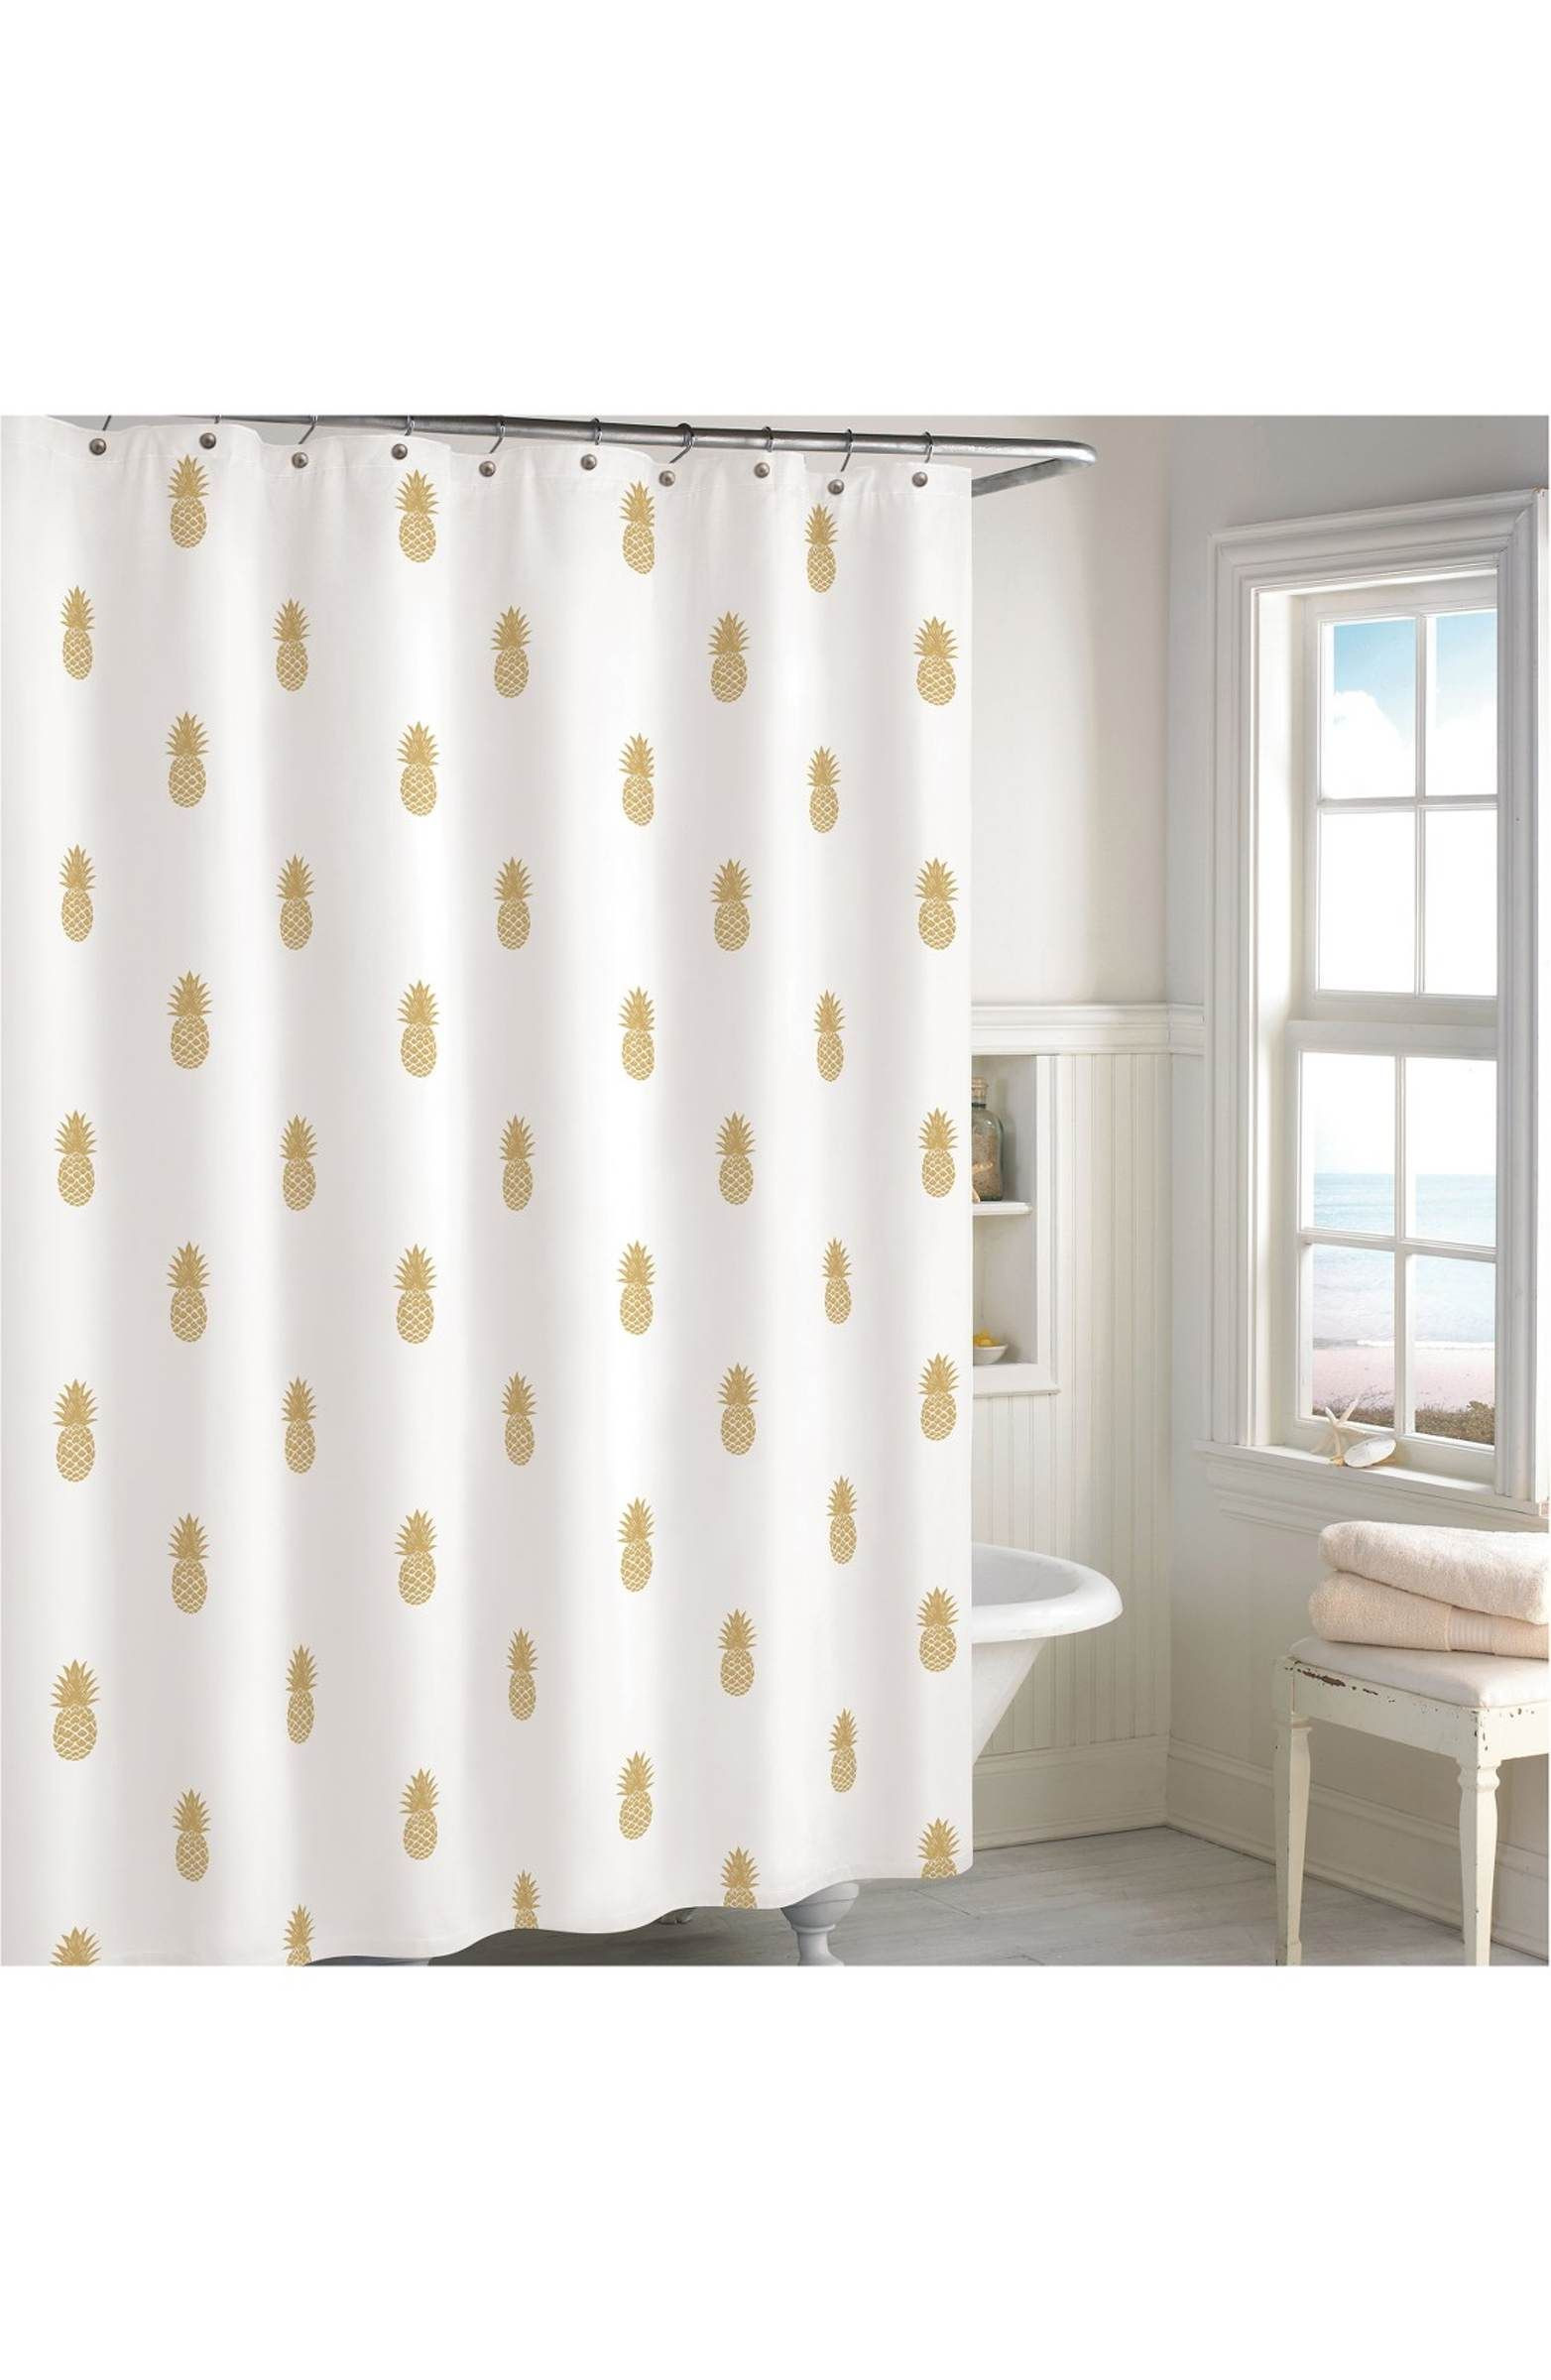 Pineapple Bathroom Decor
 Main Image Destinations Golden Pineapple Shower Curtain